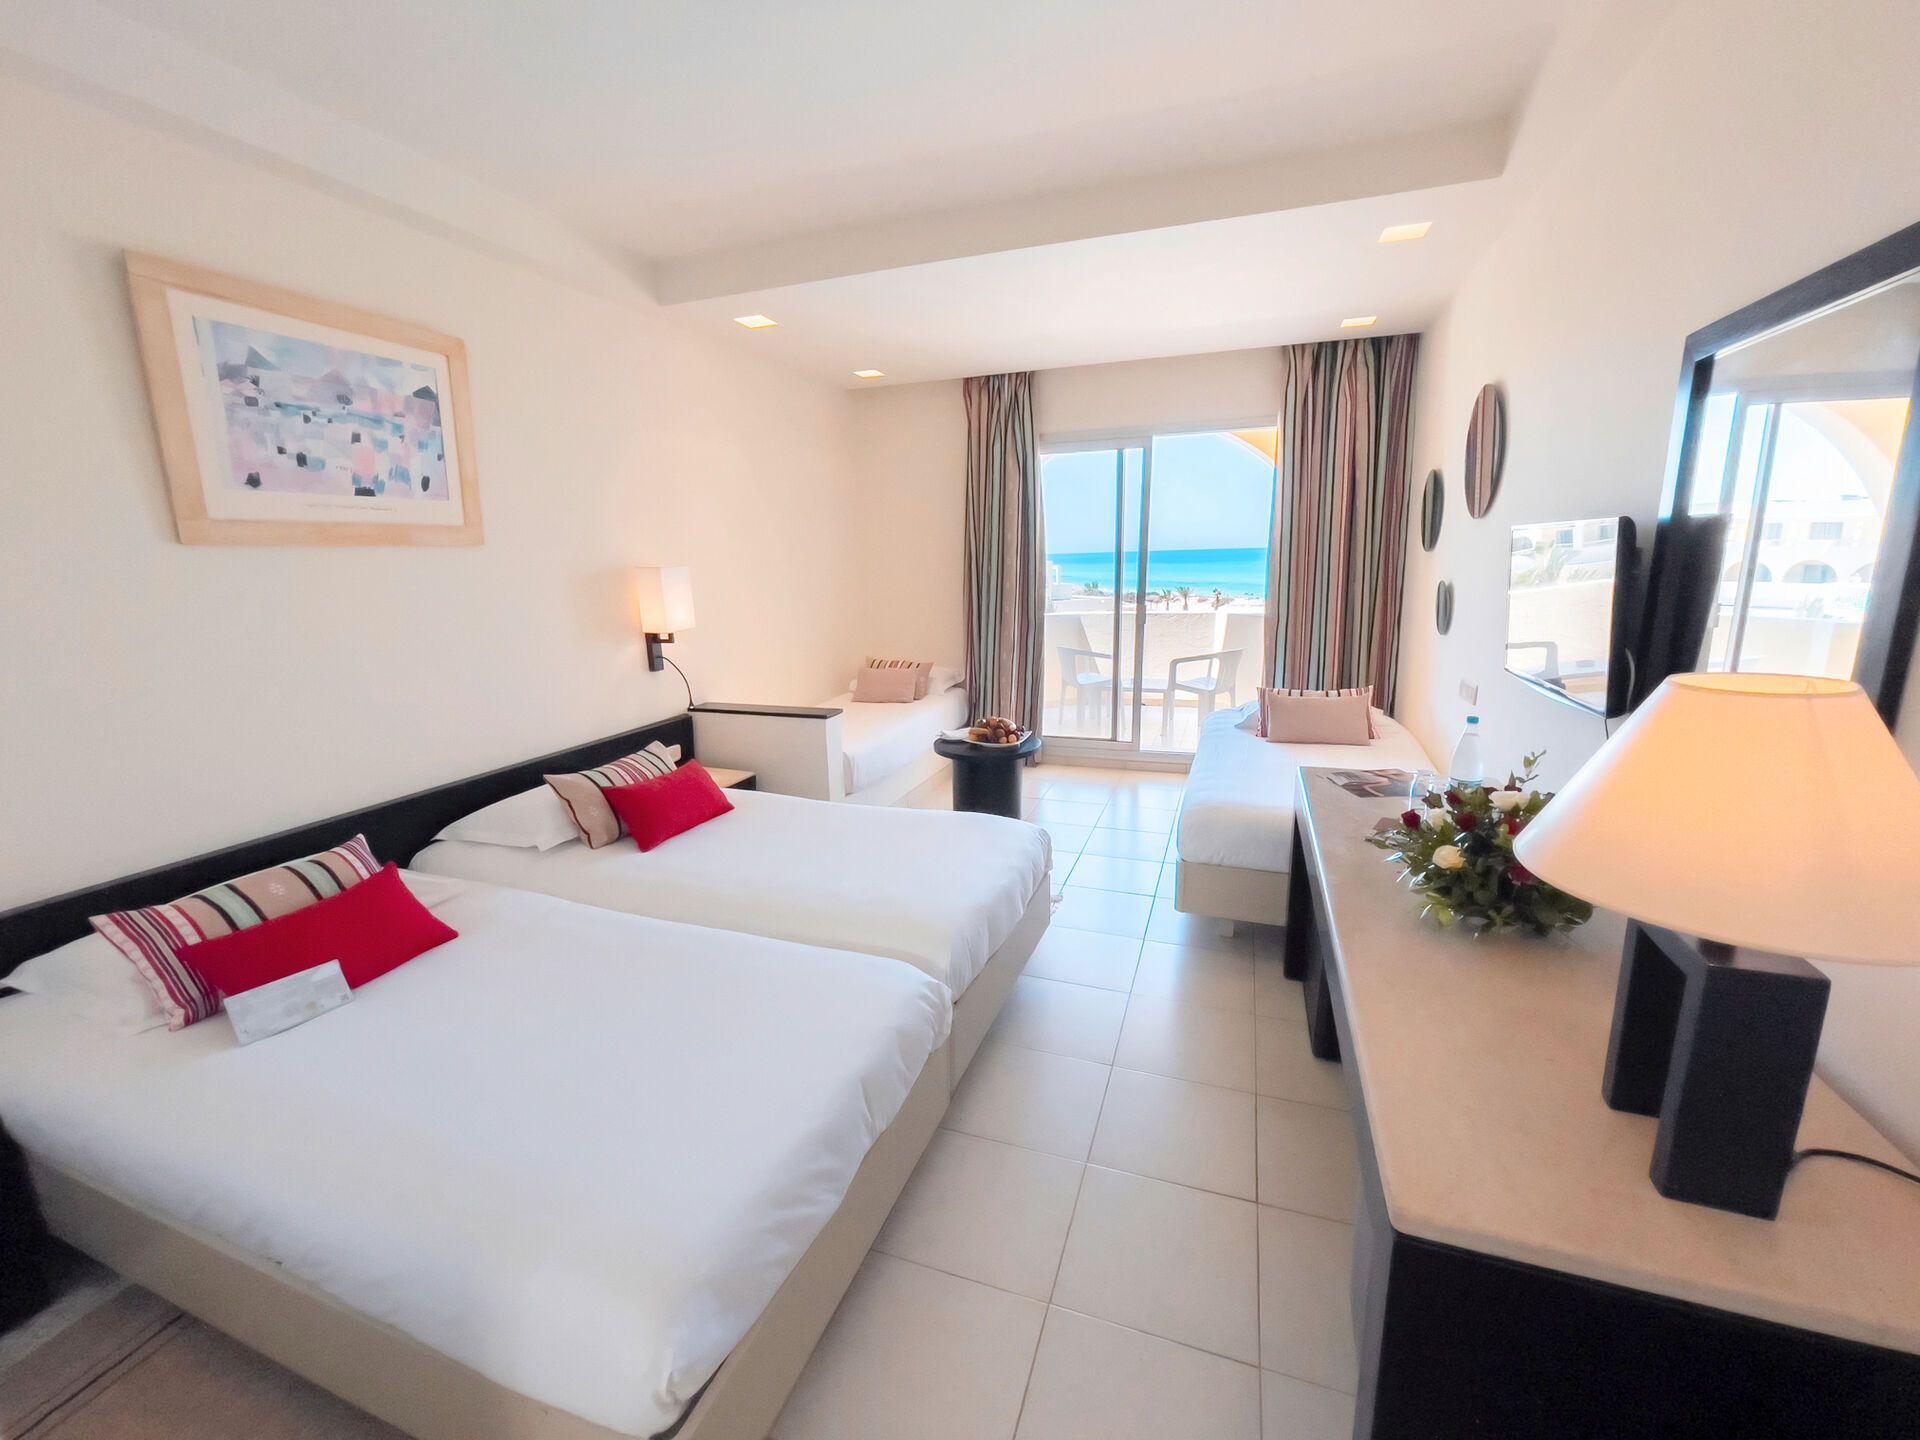 Tunisie - Djerba - Hotel Vincci Dar Midoun 4*